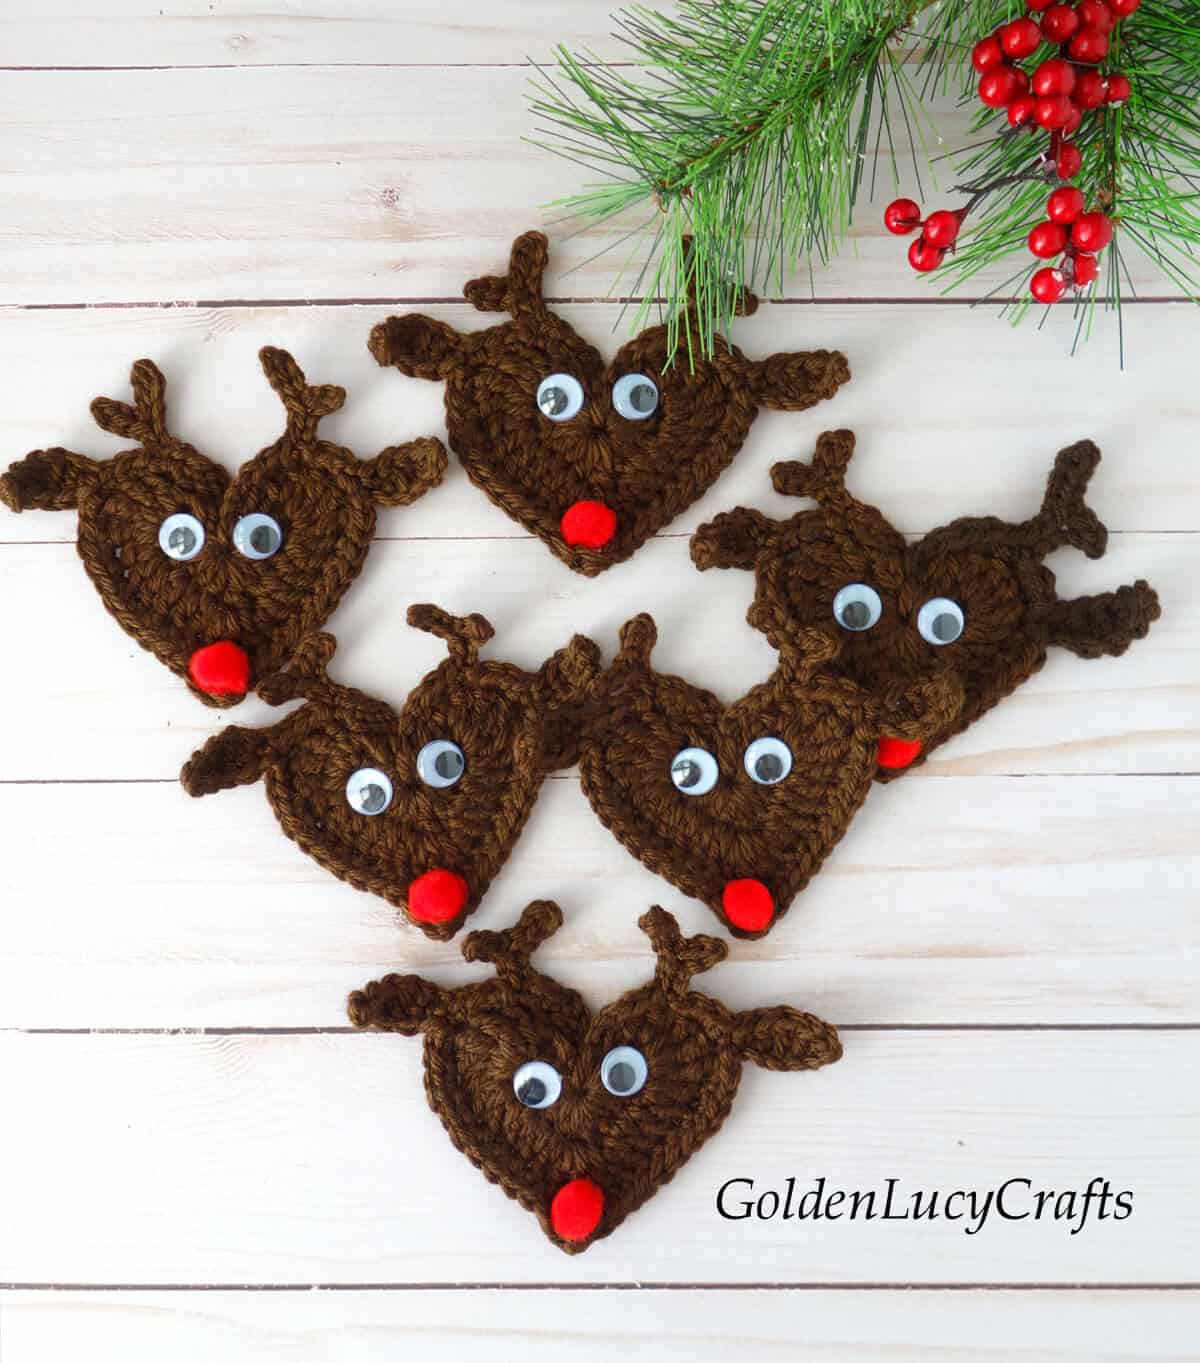 Six crocheted reindeer appliques.